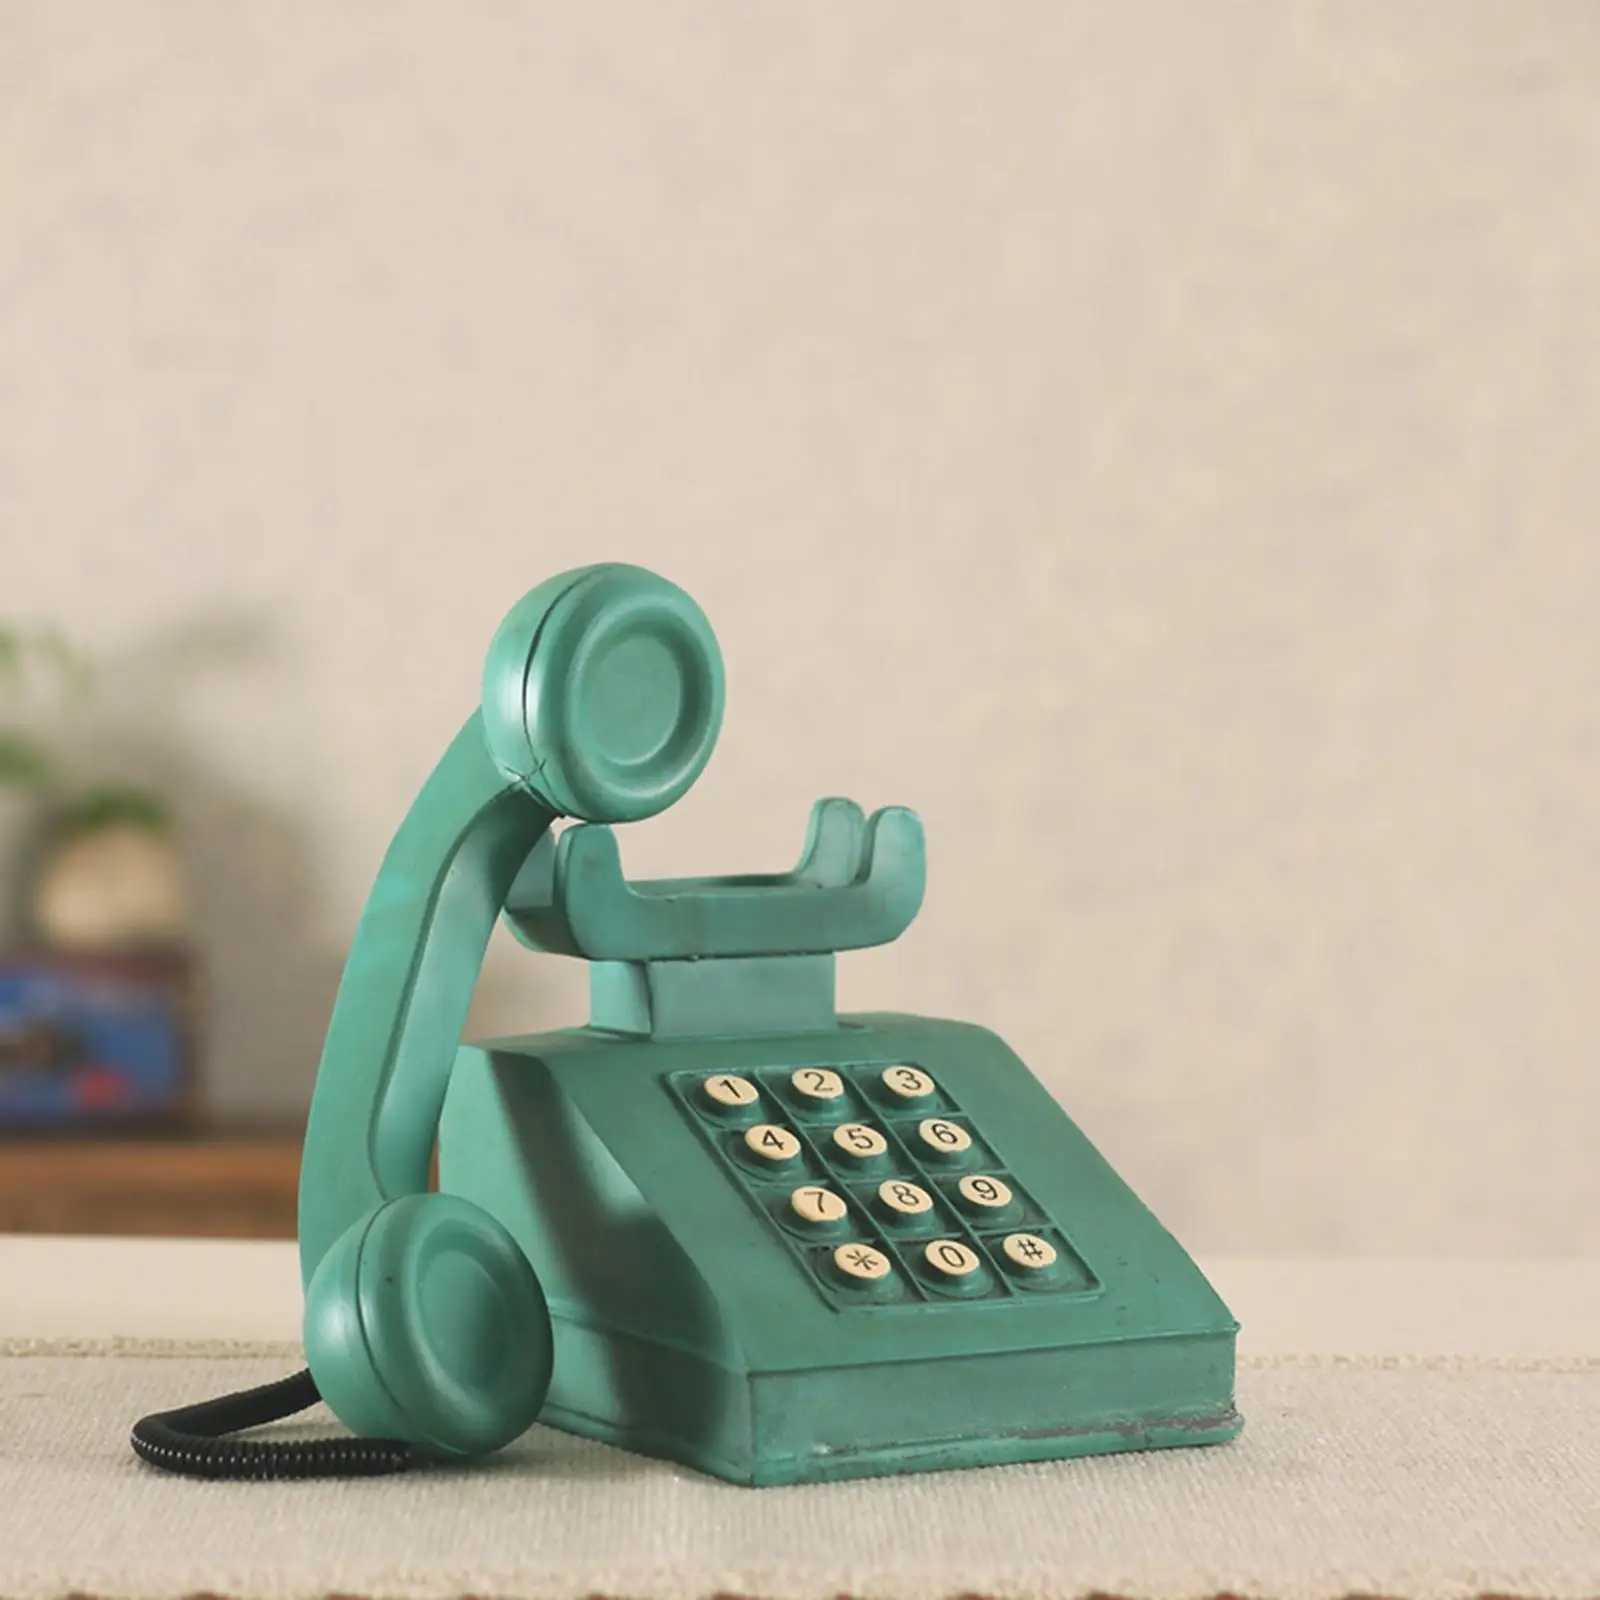 Creative American Telephone Model Figurine Resin Craft for Desktop Cafe Bar Hotel Decor